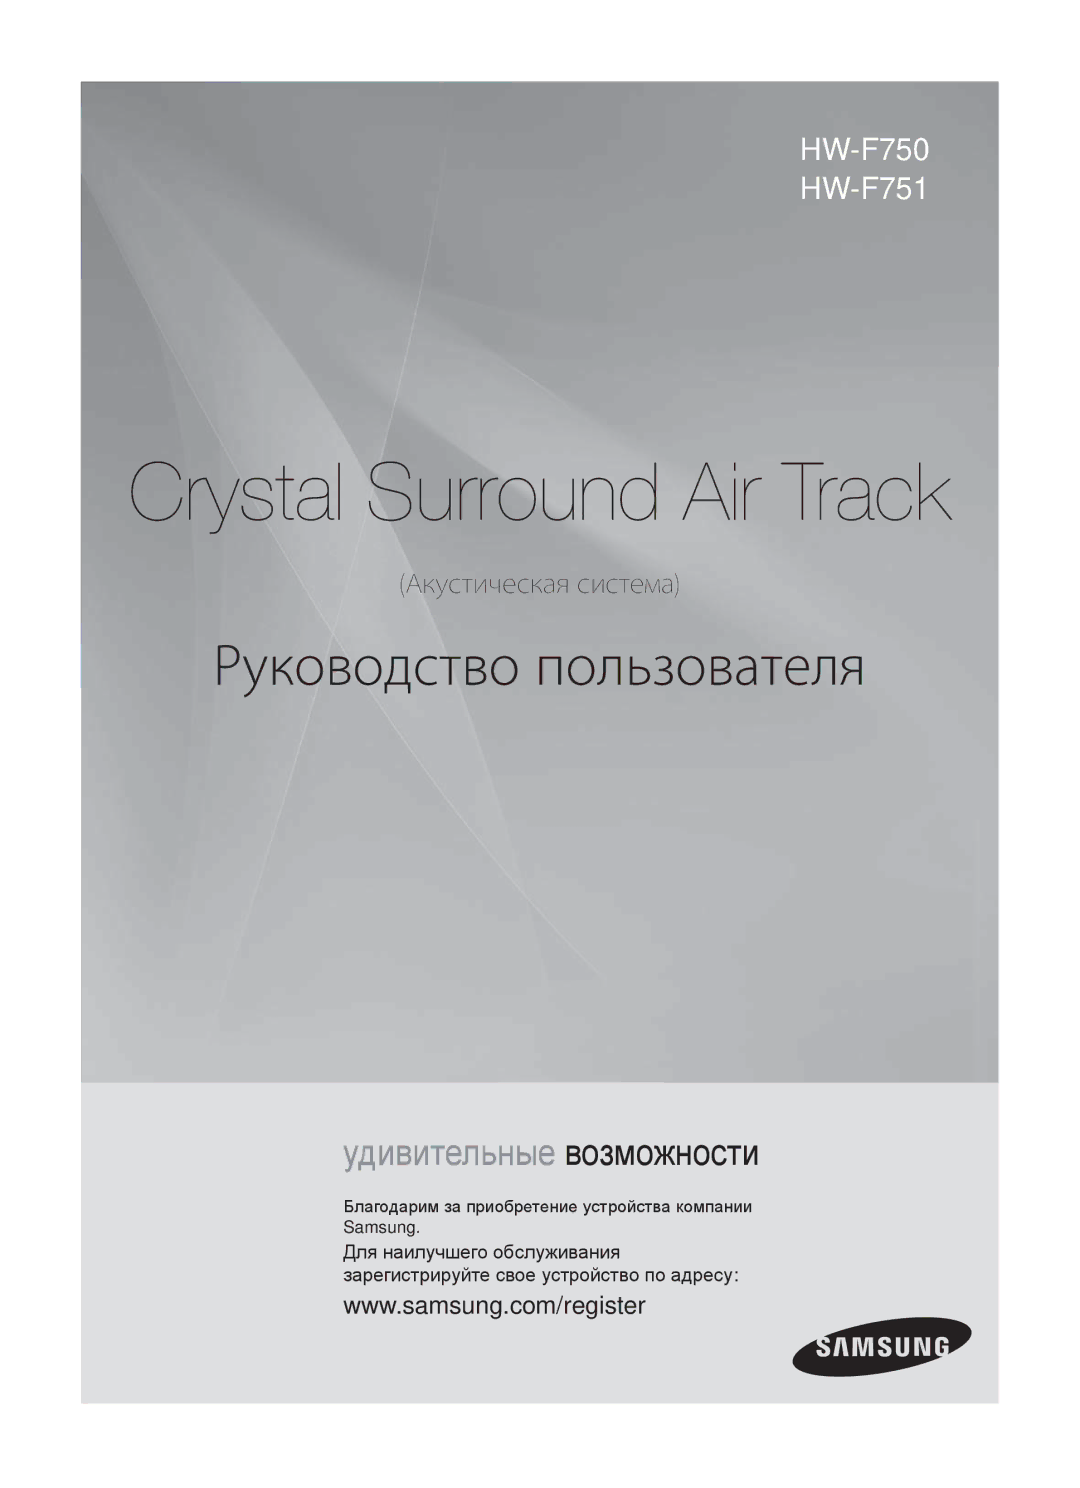 Samsung HW-F750/RU manual Crystal Surround Air Track, Ȼɥɚɝɨɞɚɪɢɦ ɡɚ ɩɪɢɨɛɪɟɬɟɧɢɟ ɭɫɬɪɨɣɫɬɜɚ ɤɨɦɩɚɧɢɢ Samsung 